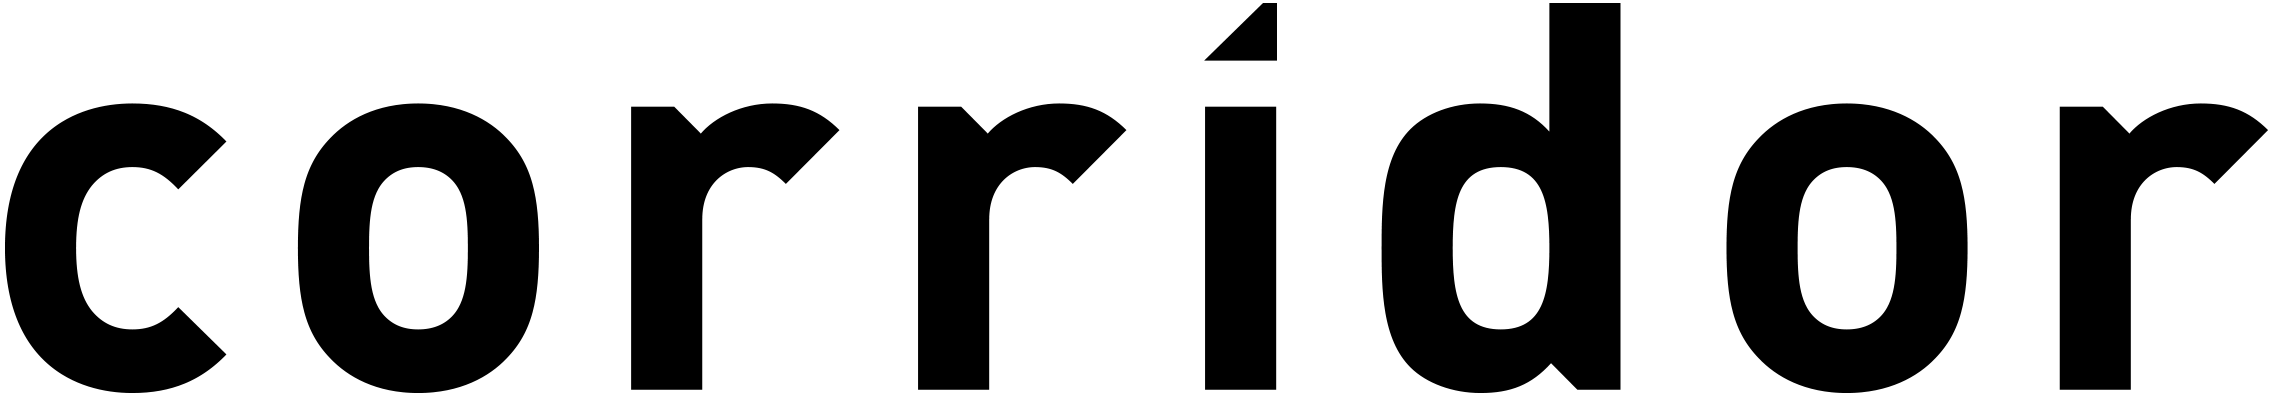 corridor Logo schwarz